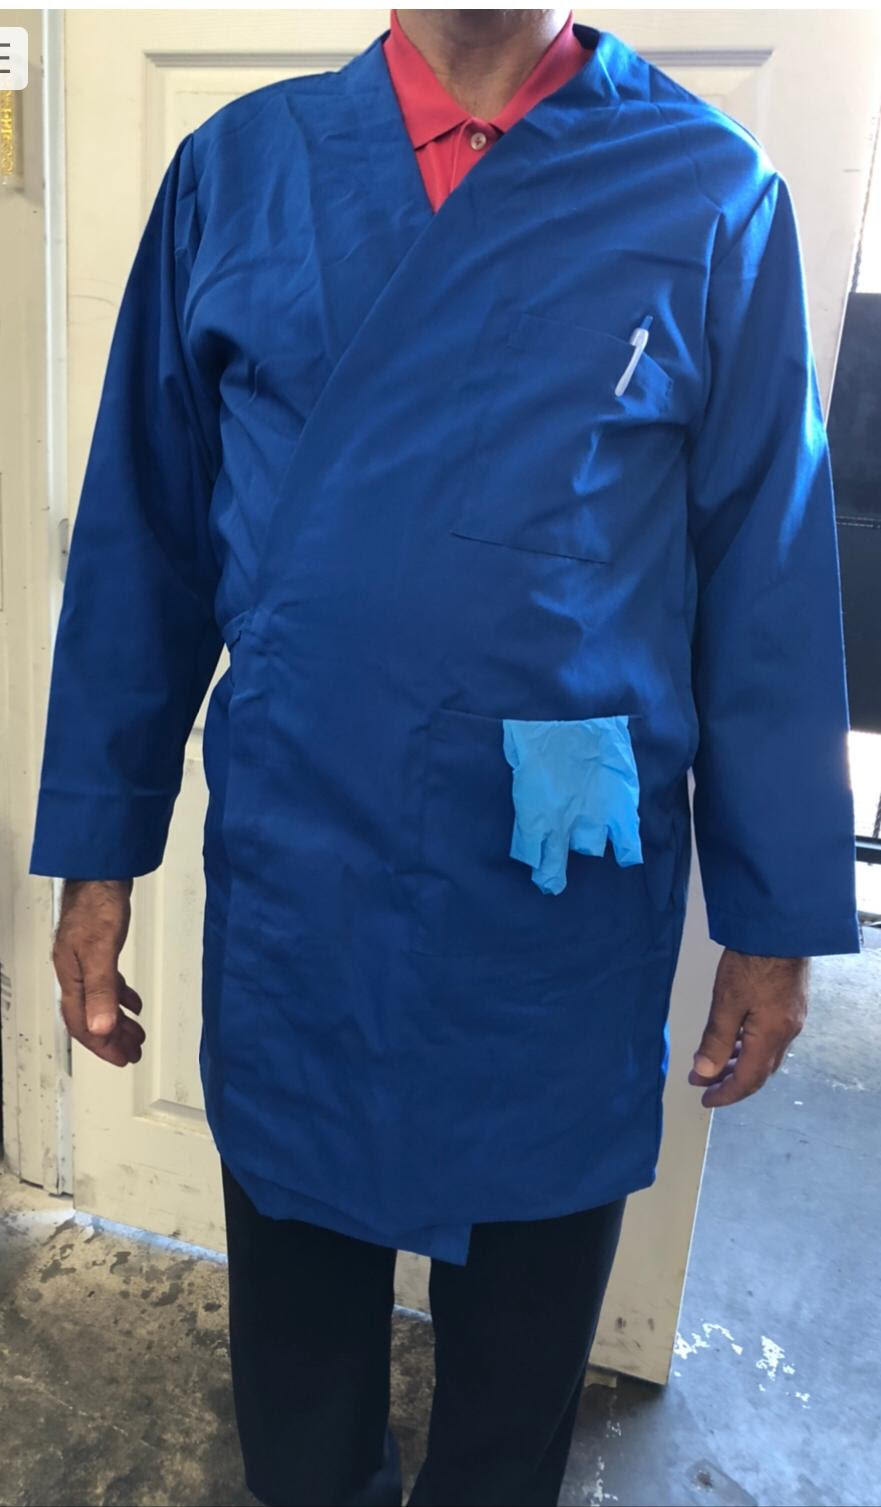 USA OTG PPE : Washable Patient & Staff Scrubs. 226000pcs. FOB N. Carolina